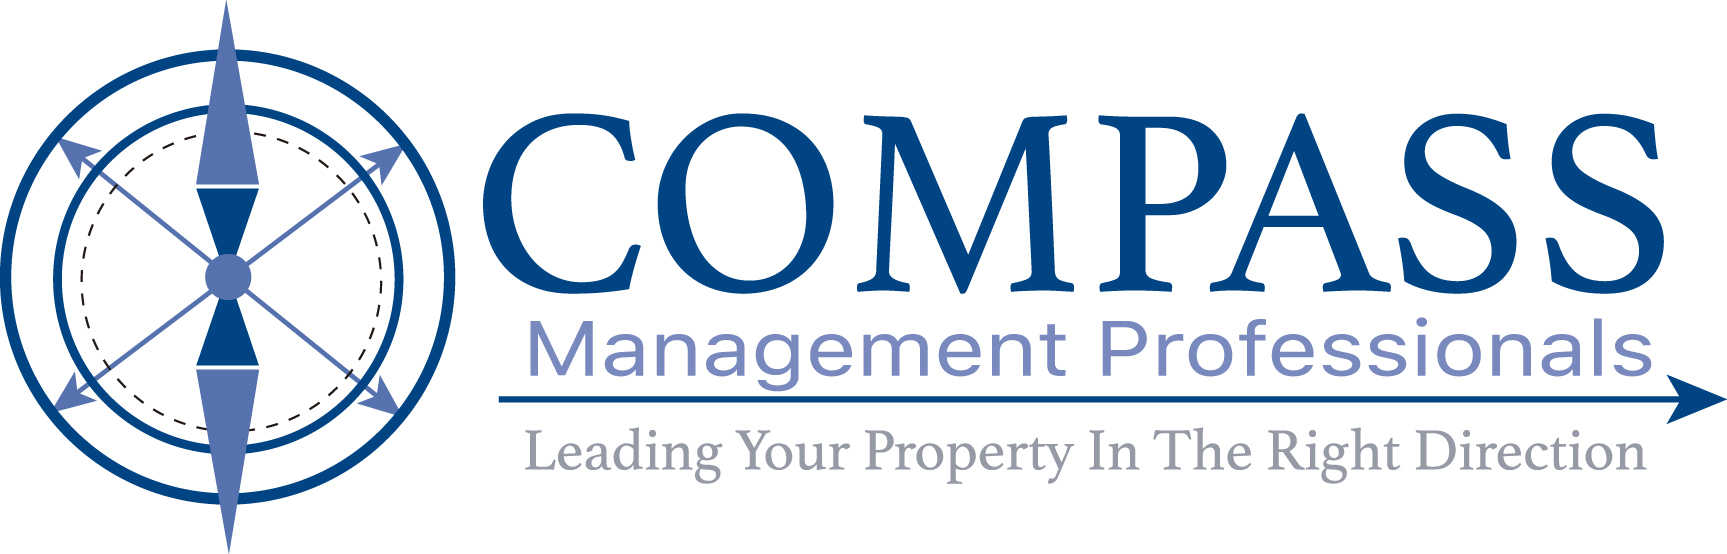 Compass Management Professionals logo